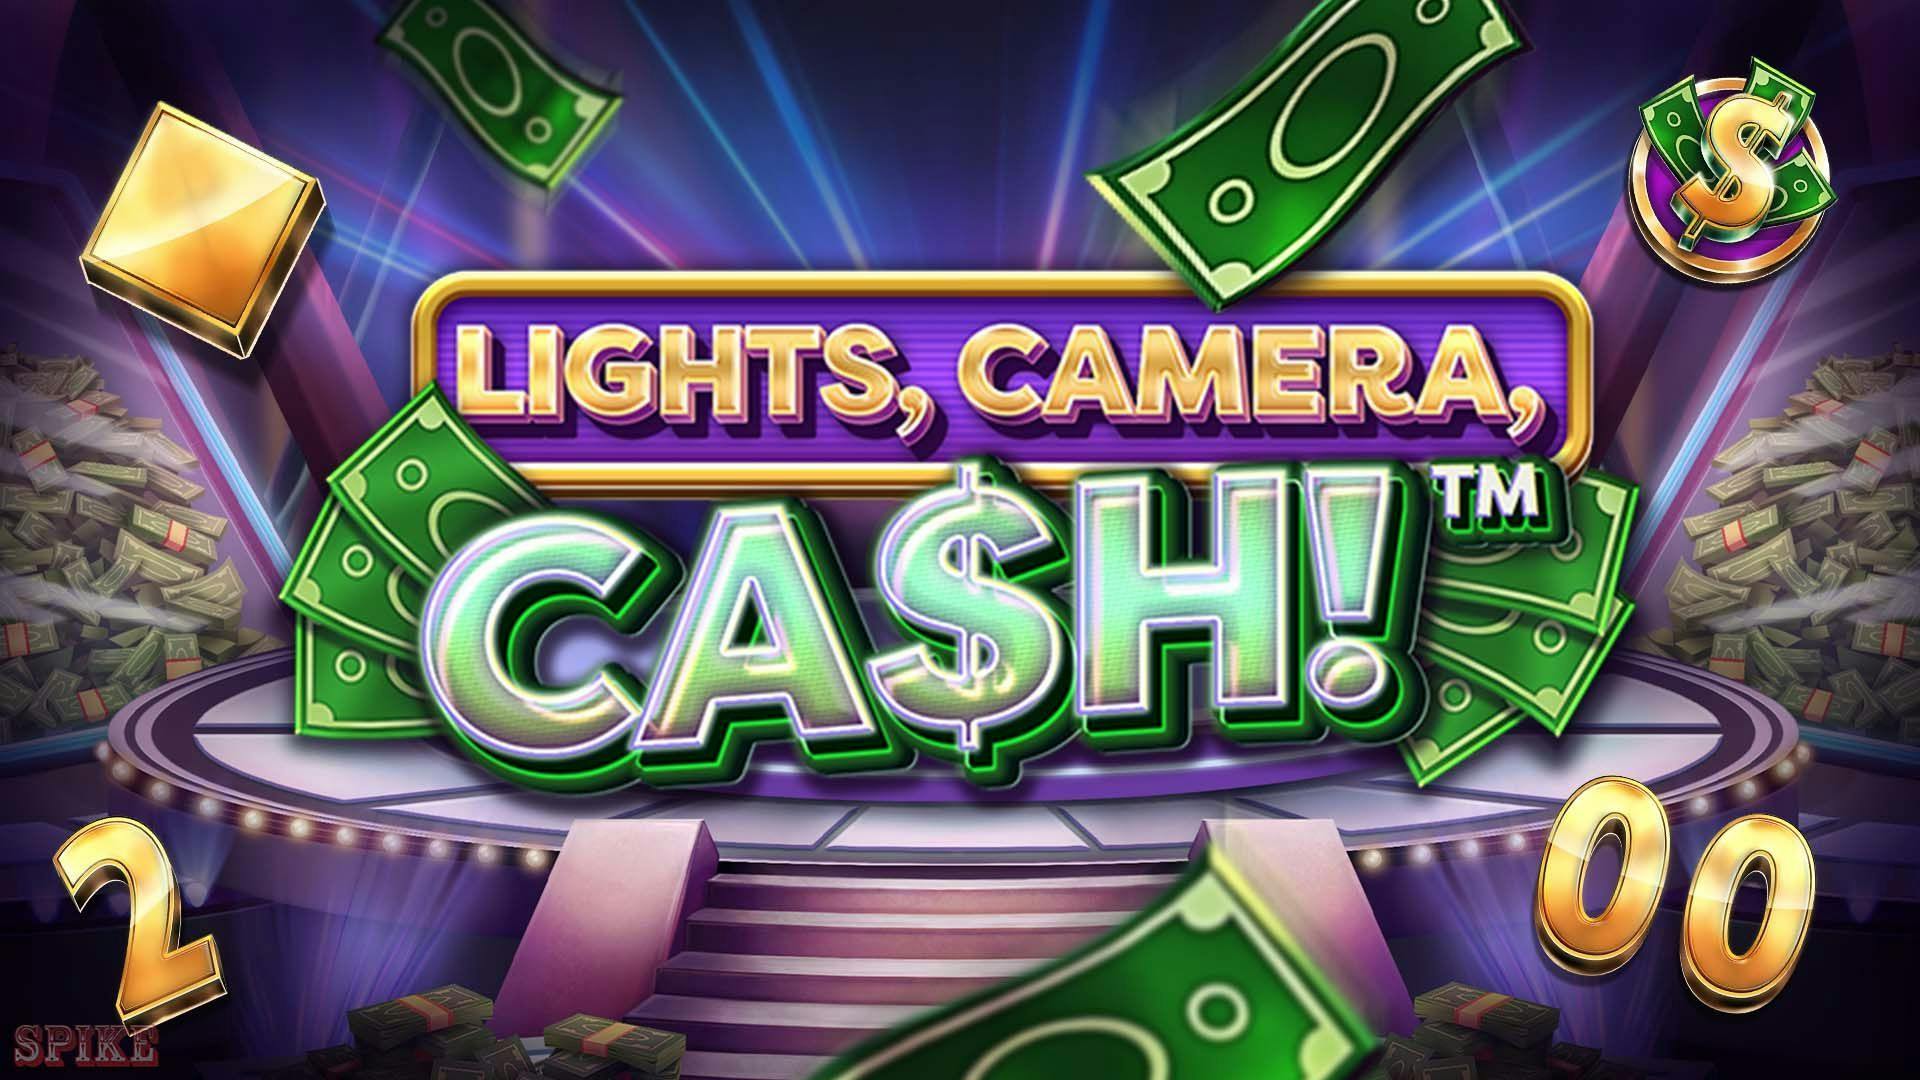 Lights, Camera, Cash! Slot Gratis